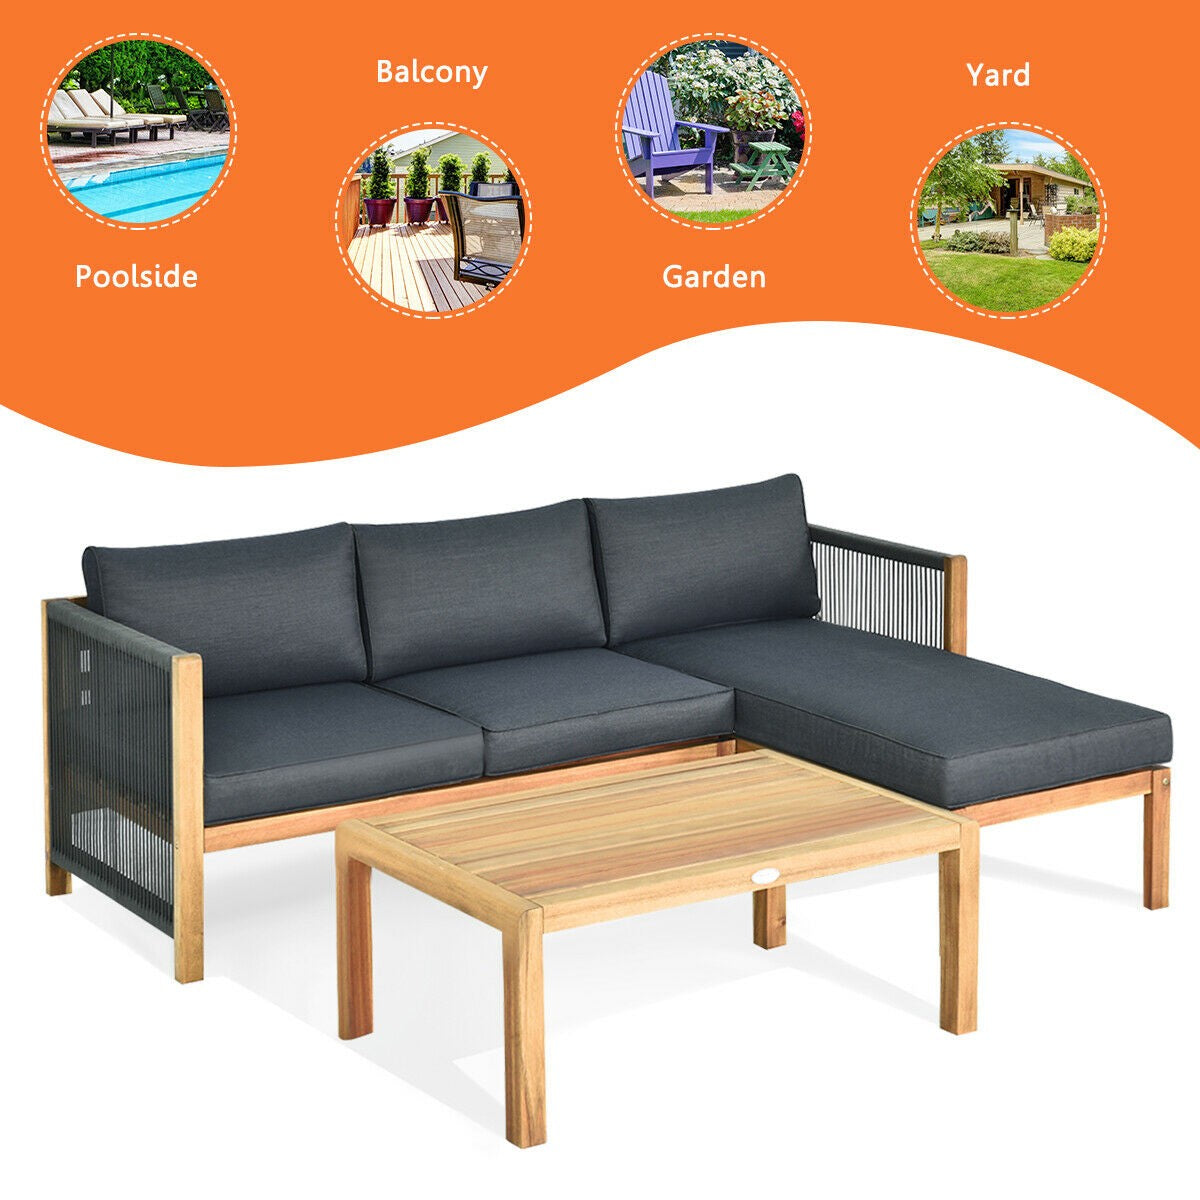 Giantex 3 Piece Outdoor Patio Furniture Set, Acacia Wood Sectional Sofa w/ Seat Cushions (Grey)